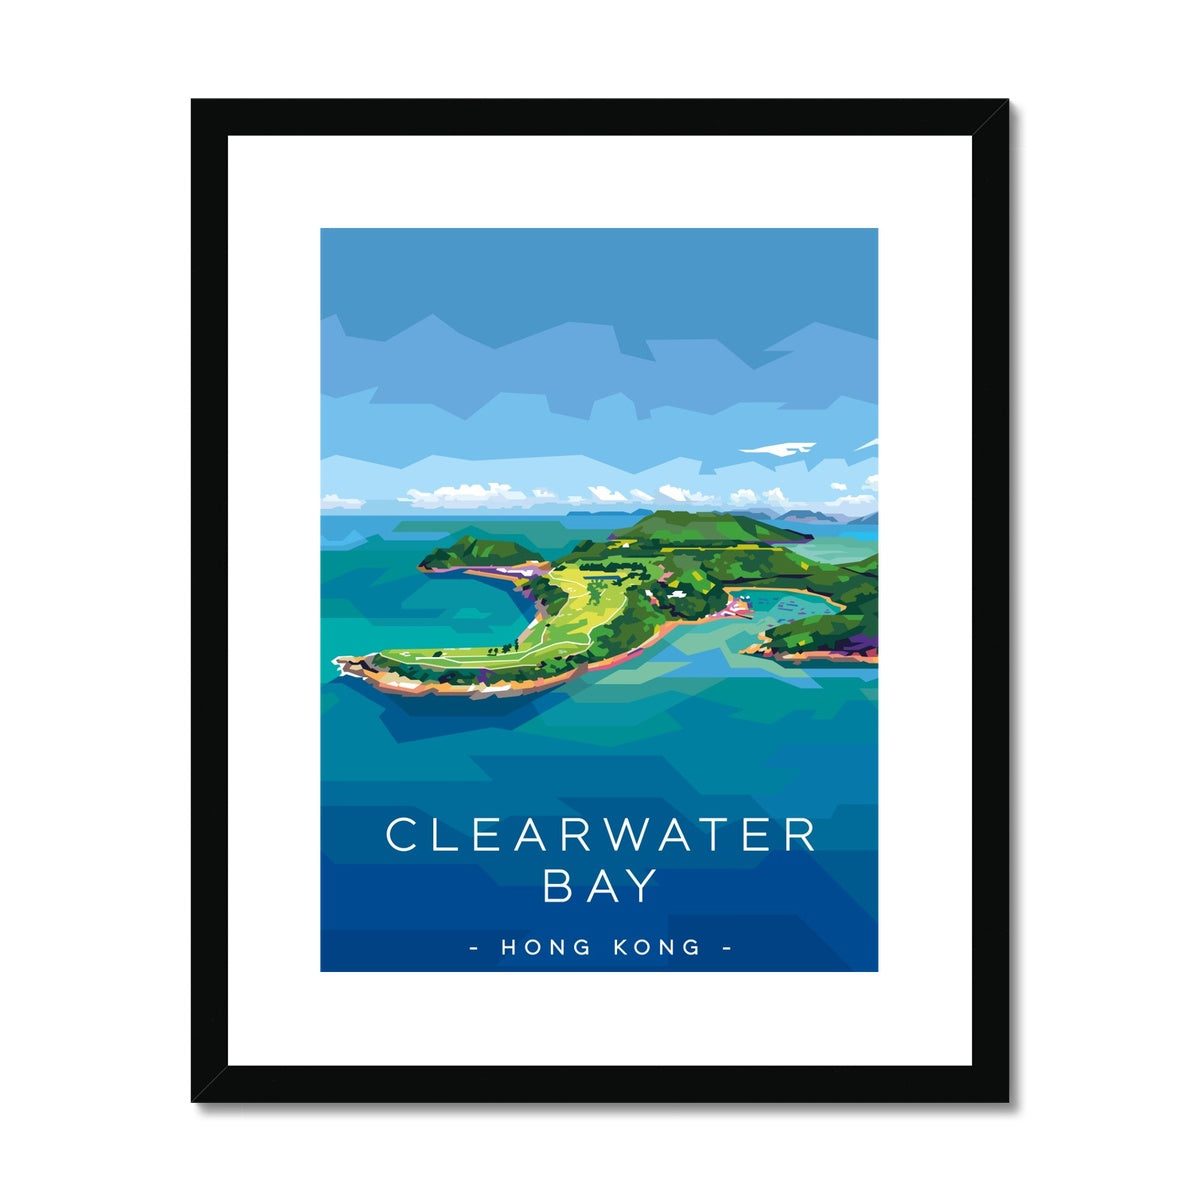 Hong Kong Travel - Clearwater Bay Framed & Mounted Print